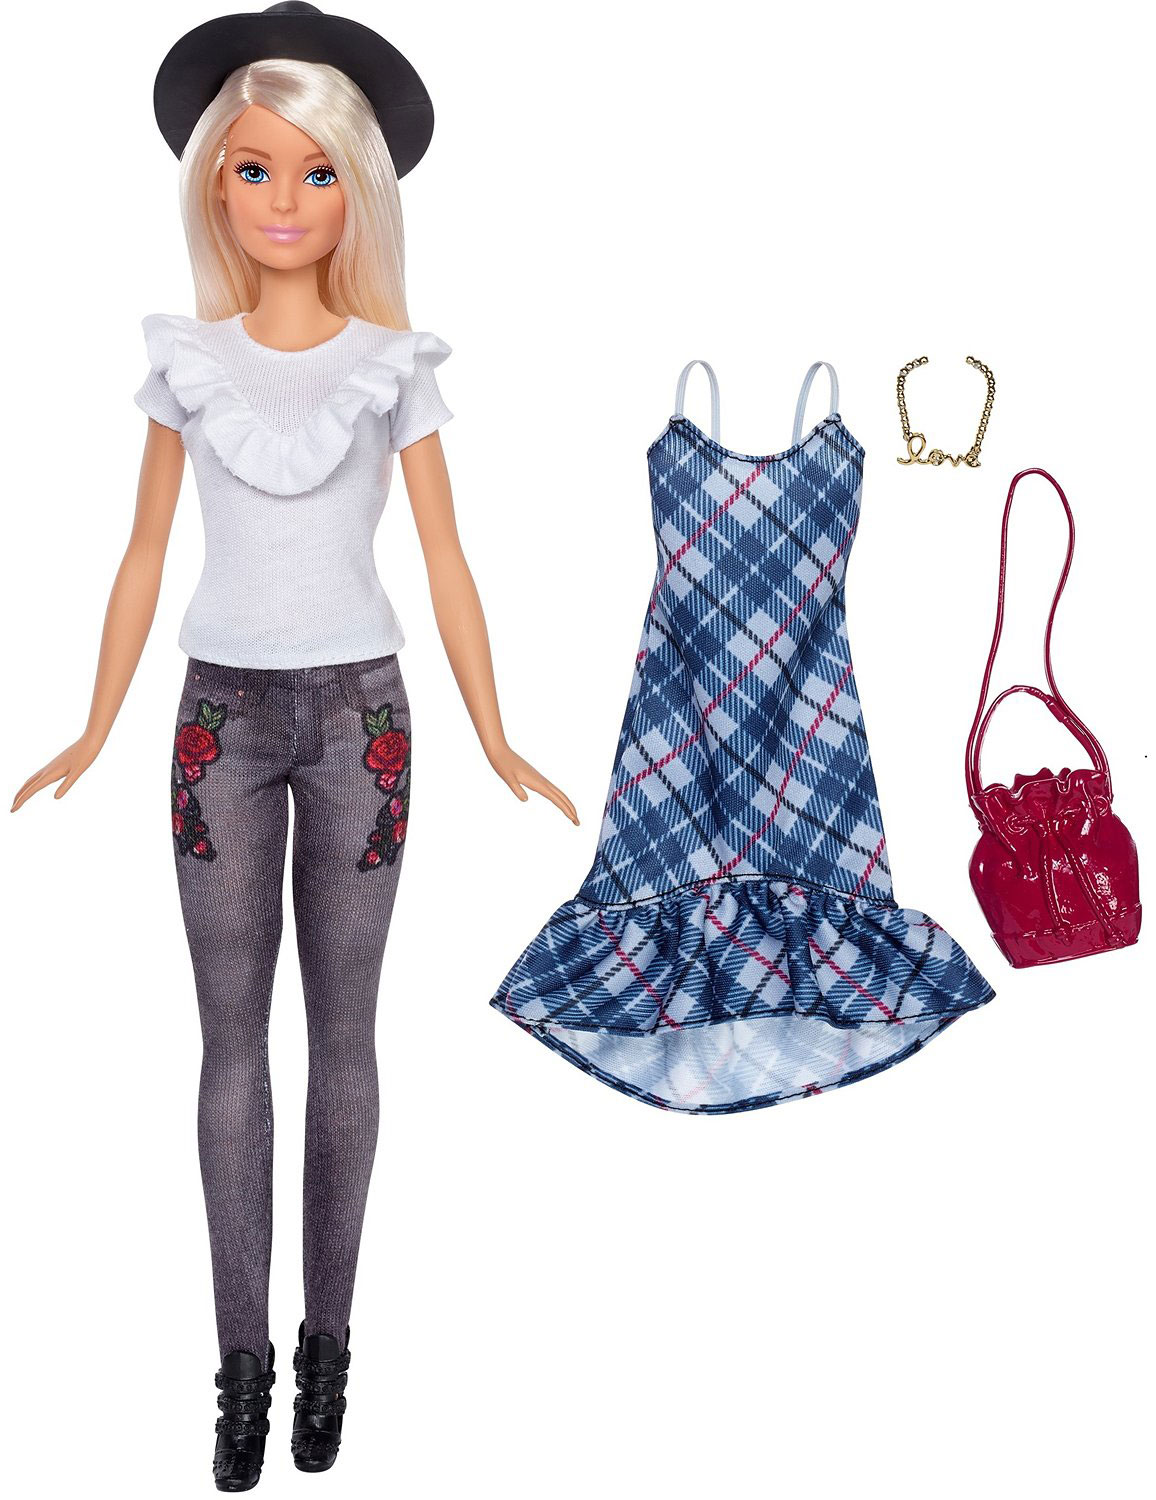 Doll clothes barbie ssc357p1